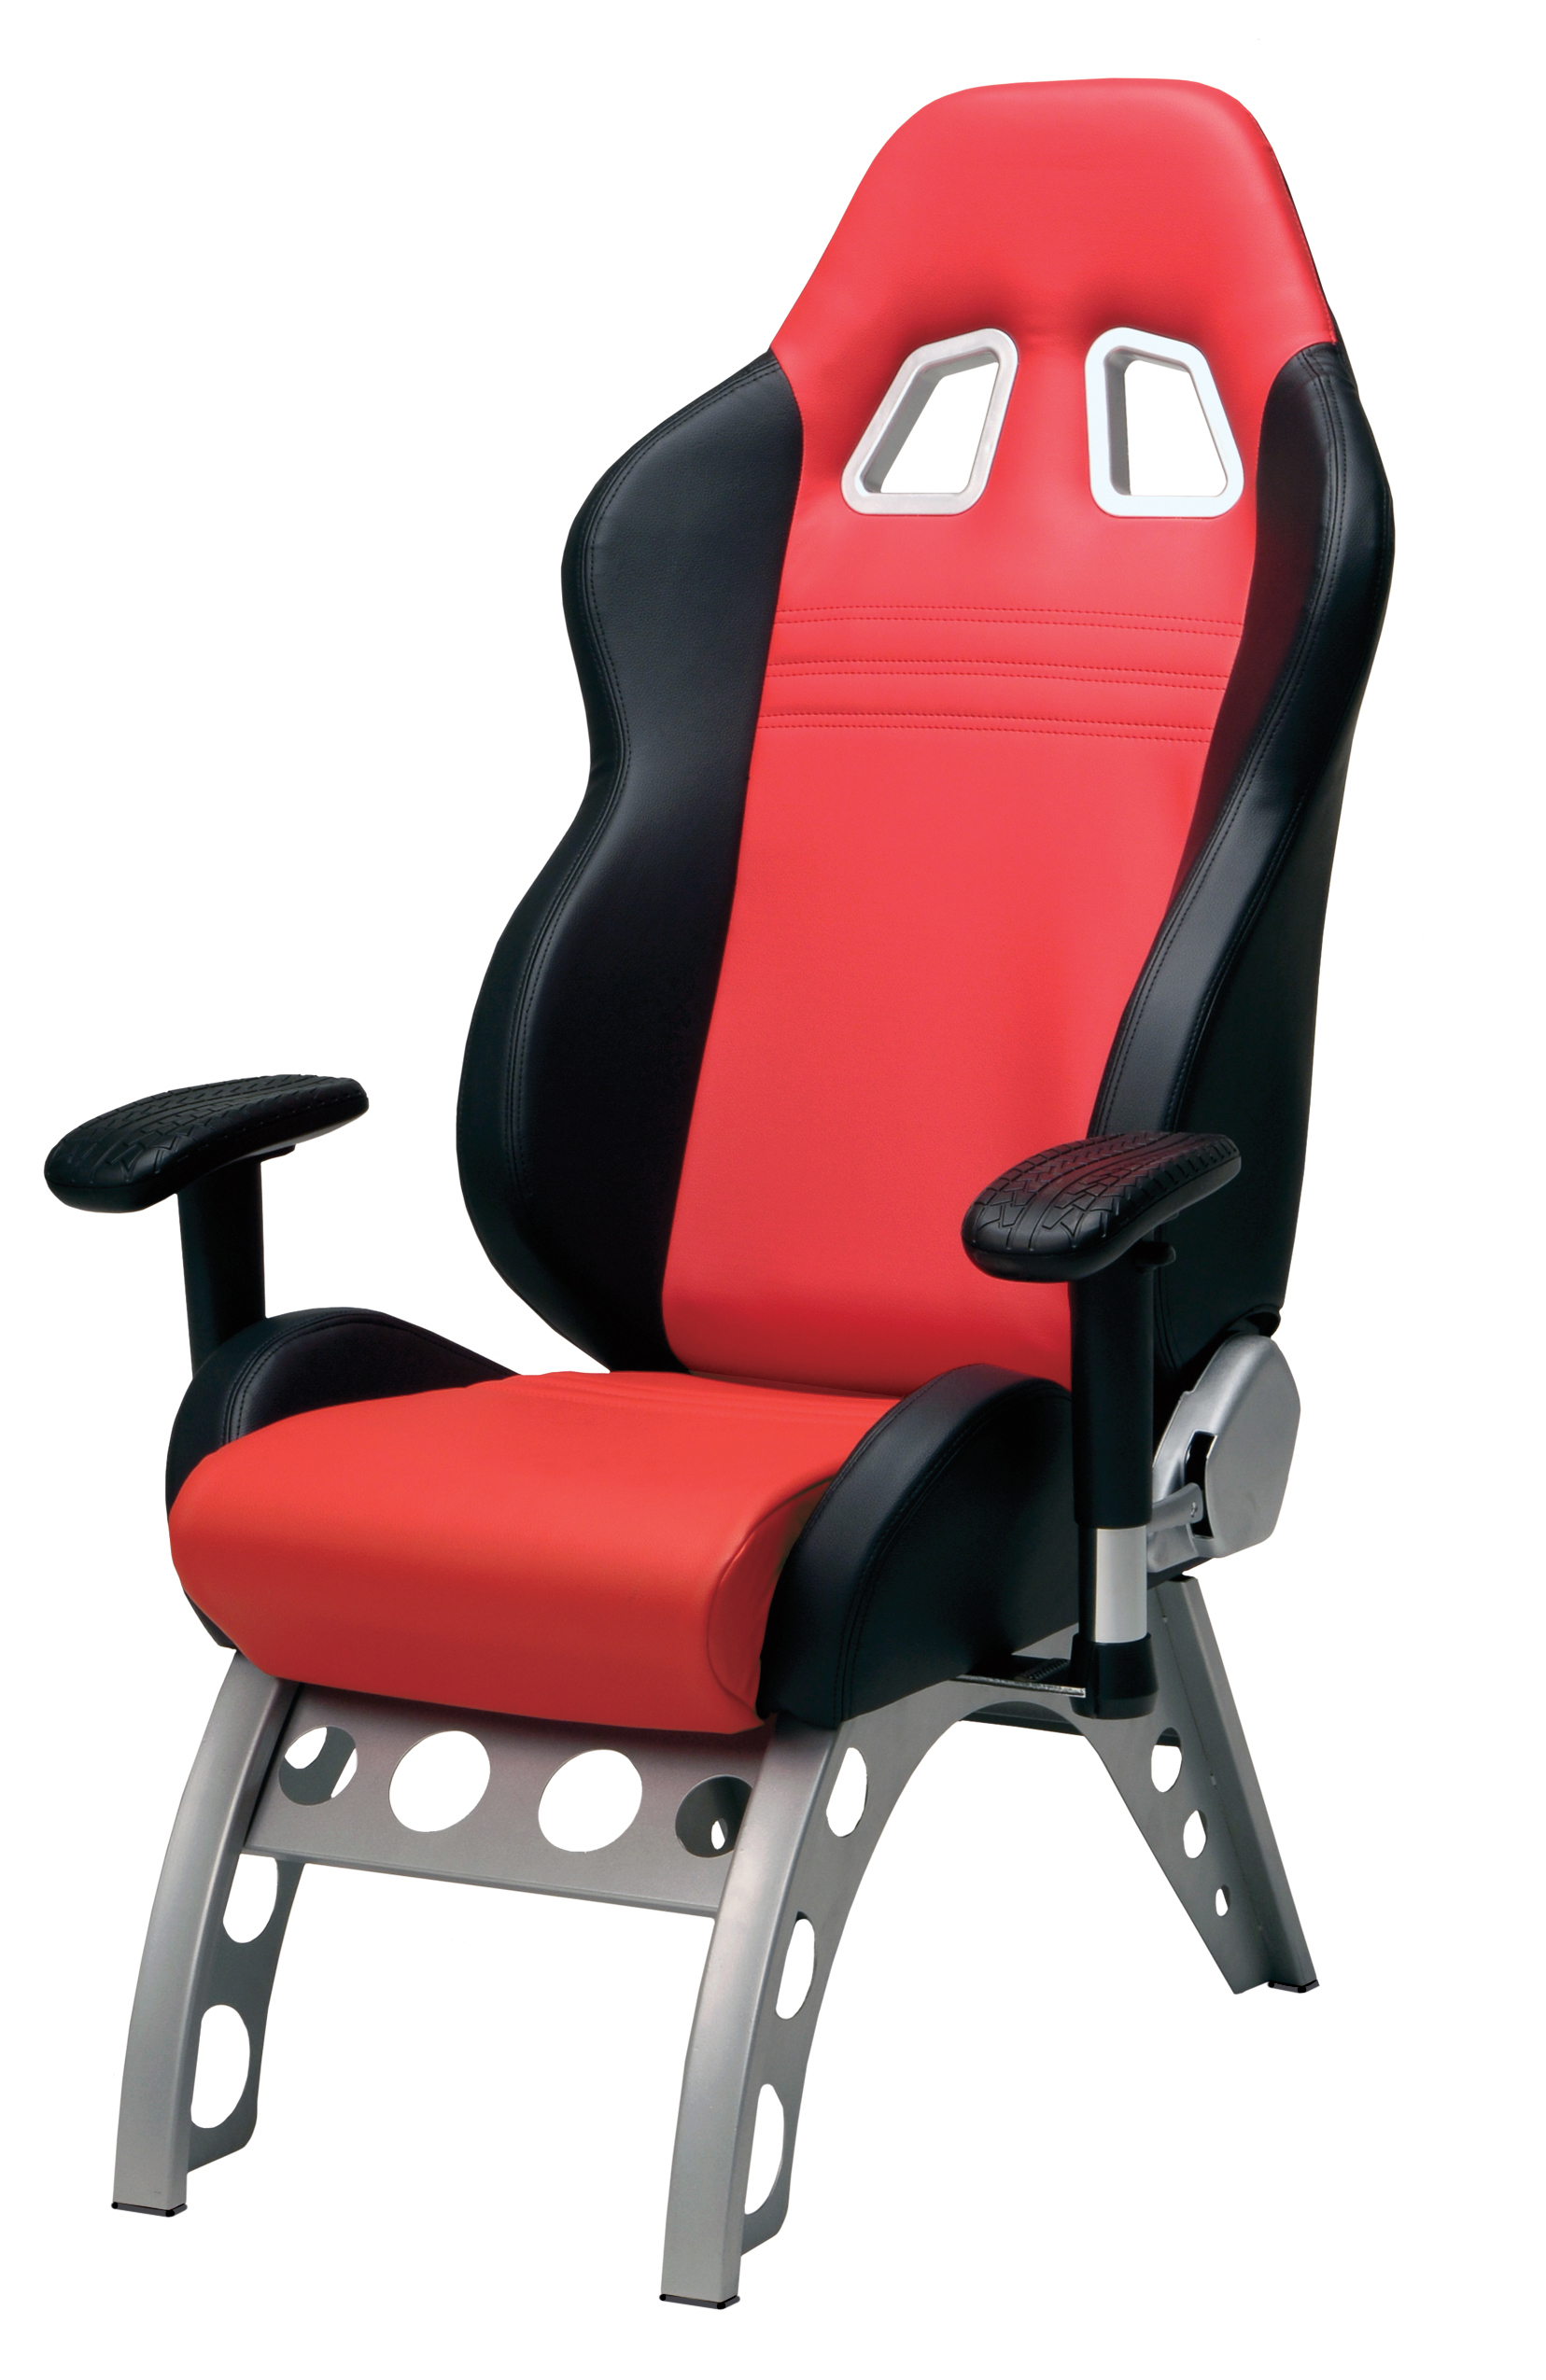 custom gaming chair